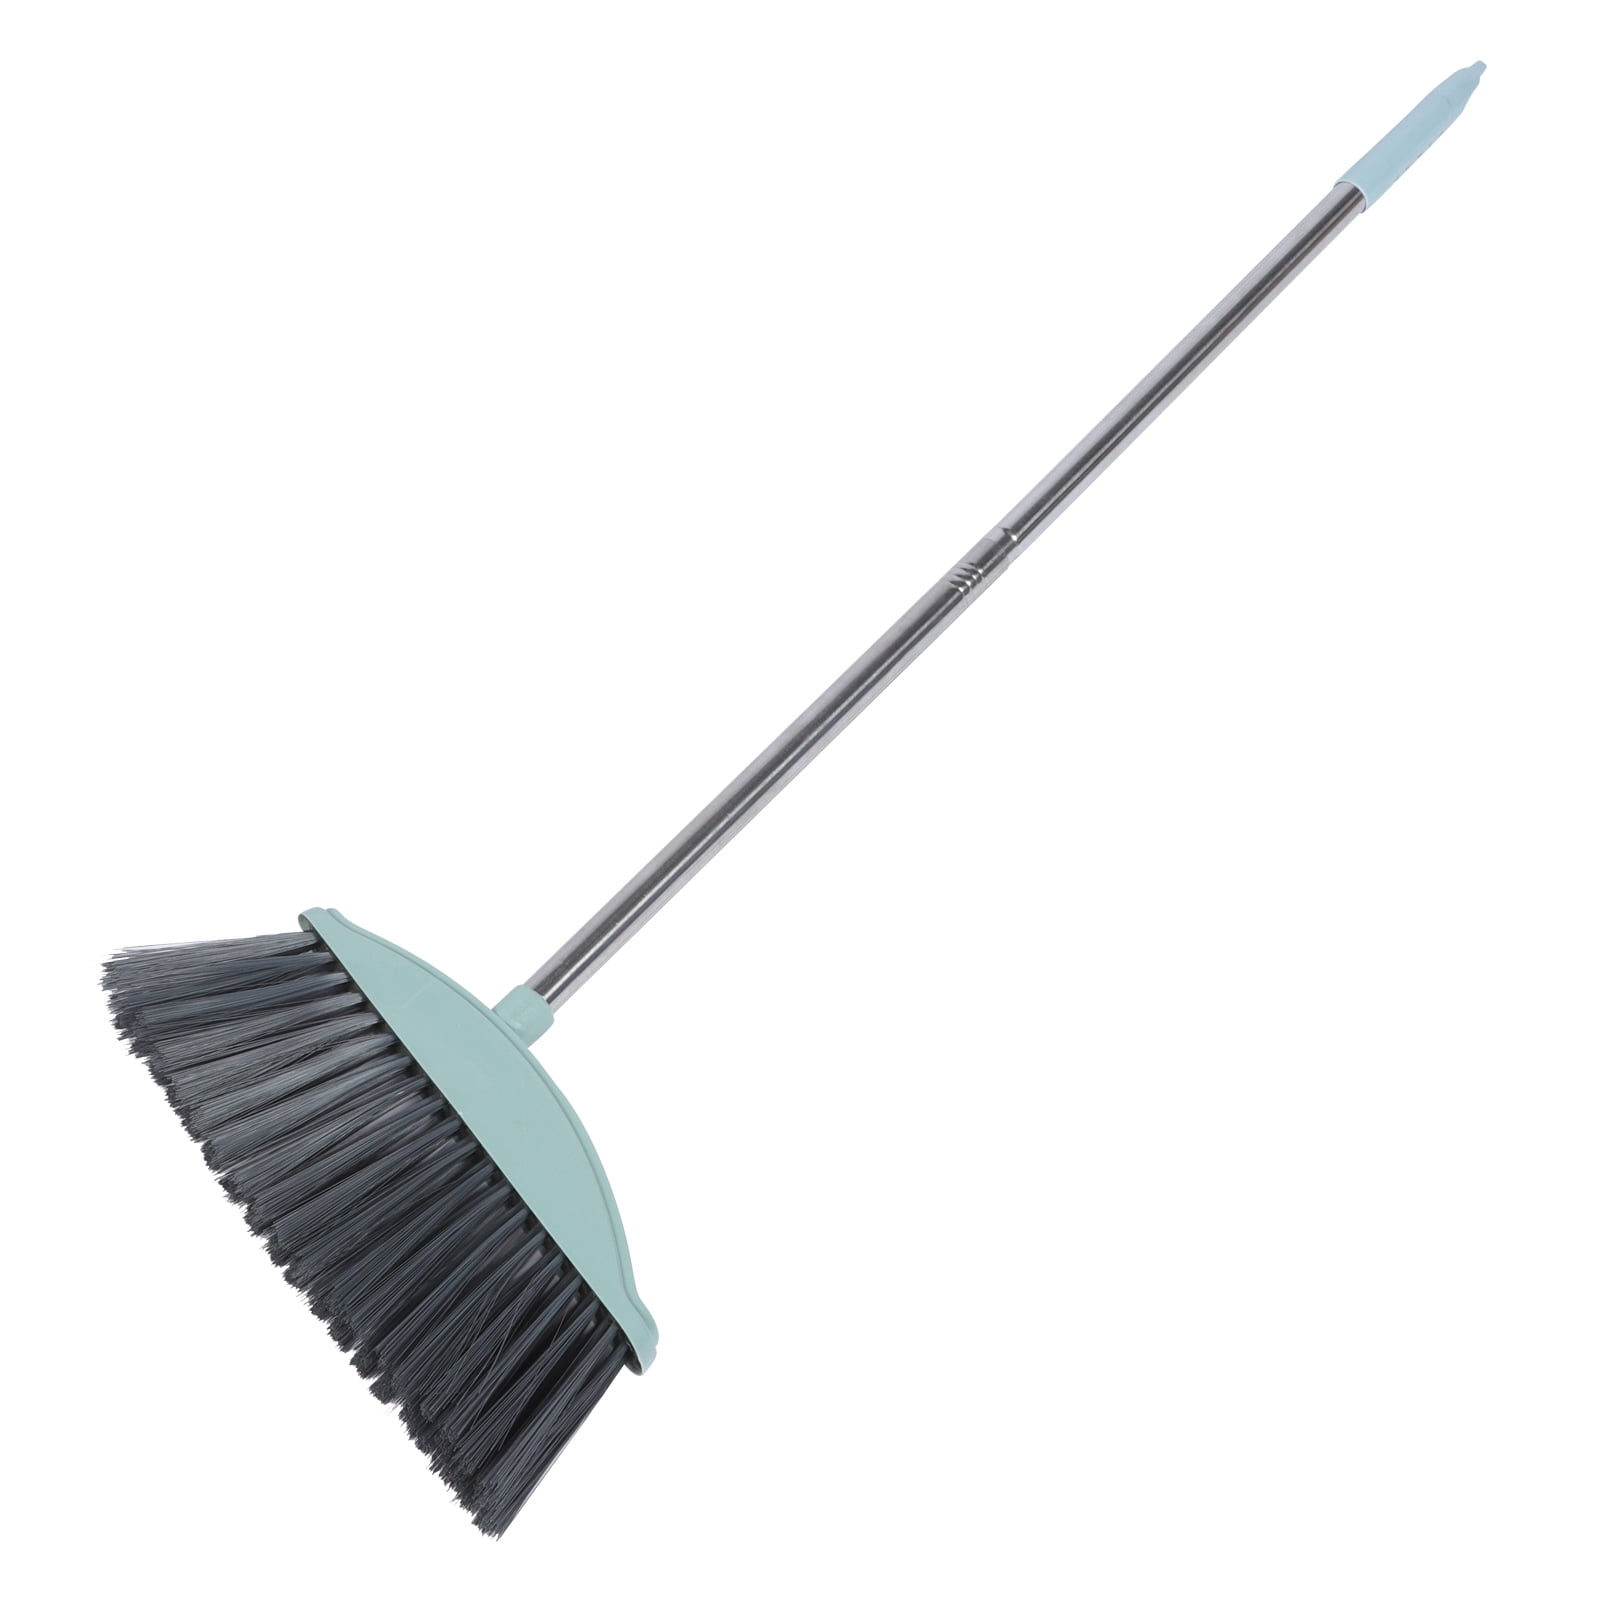  DOITOOL 3pcs Splicable Broom Garden Broom Handled Brooms  Sweeping Broom Kitchen Broom Carpet Brushes for Cleaning Broom for Hardwood  Floors Stainless Steel Garbage Shovel Anti-Static : Health & Household